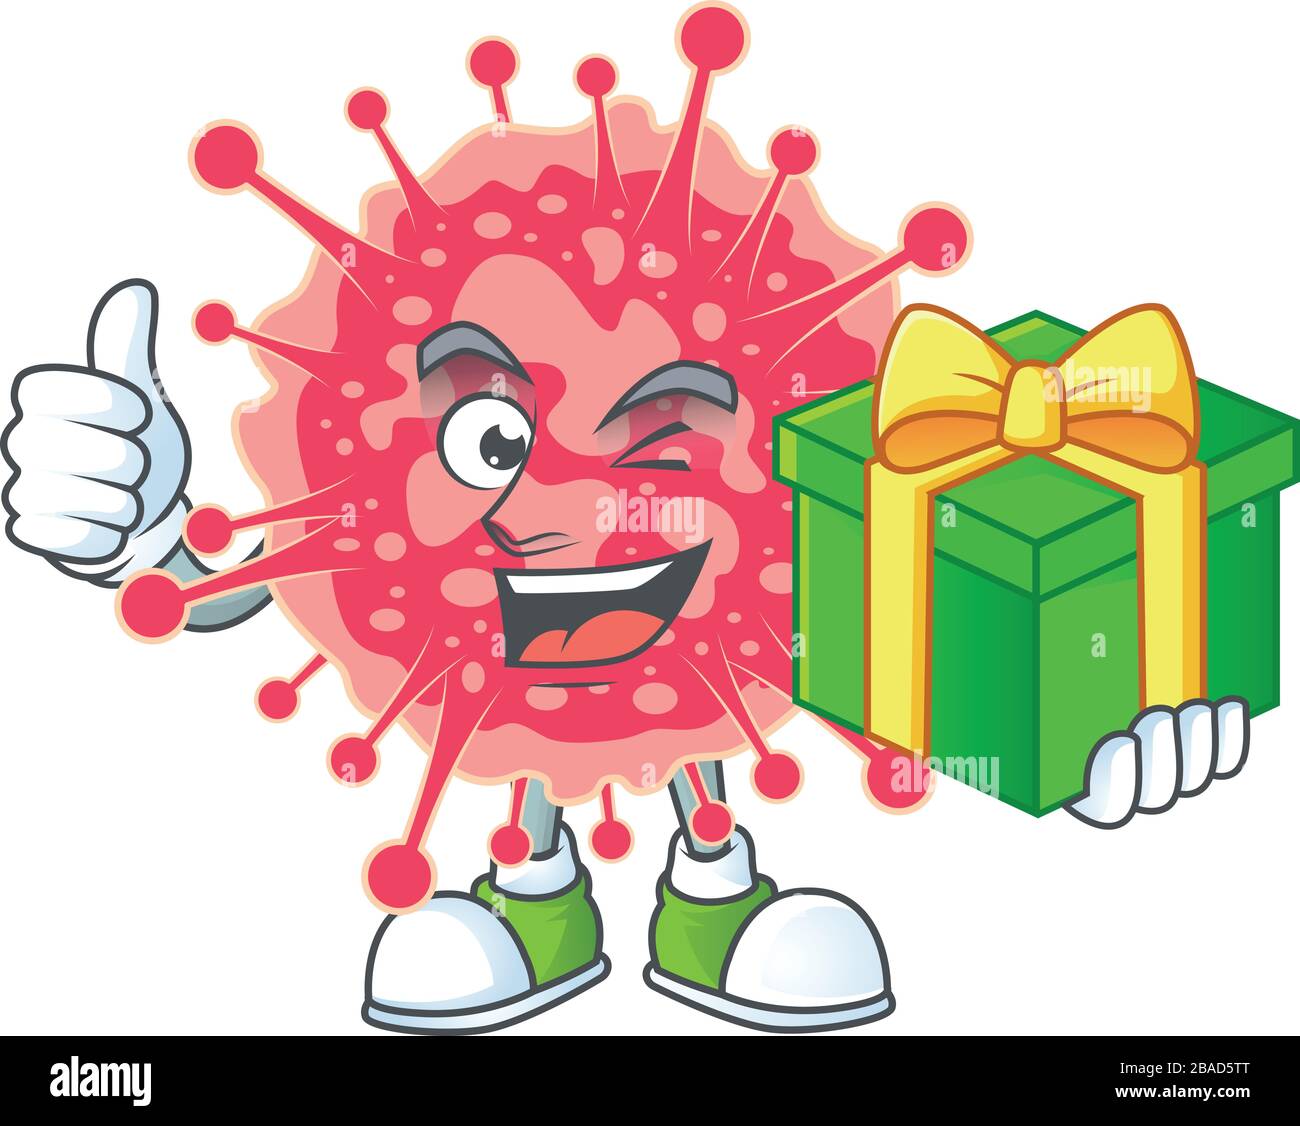 Cheerful coronavirus emergency cartoon character holding a gift box Stock Vector